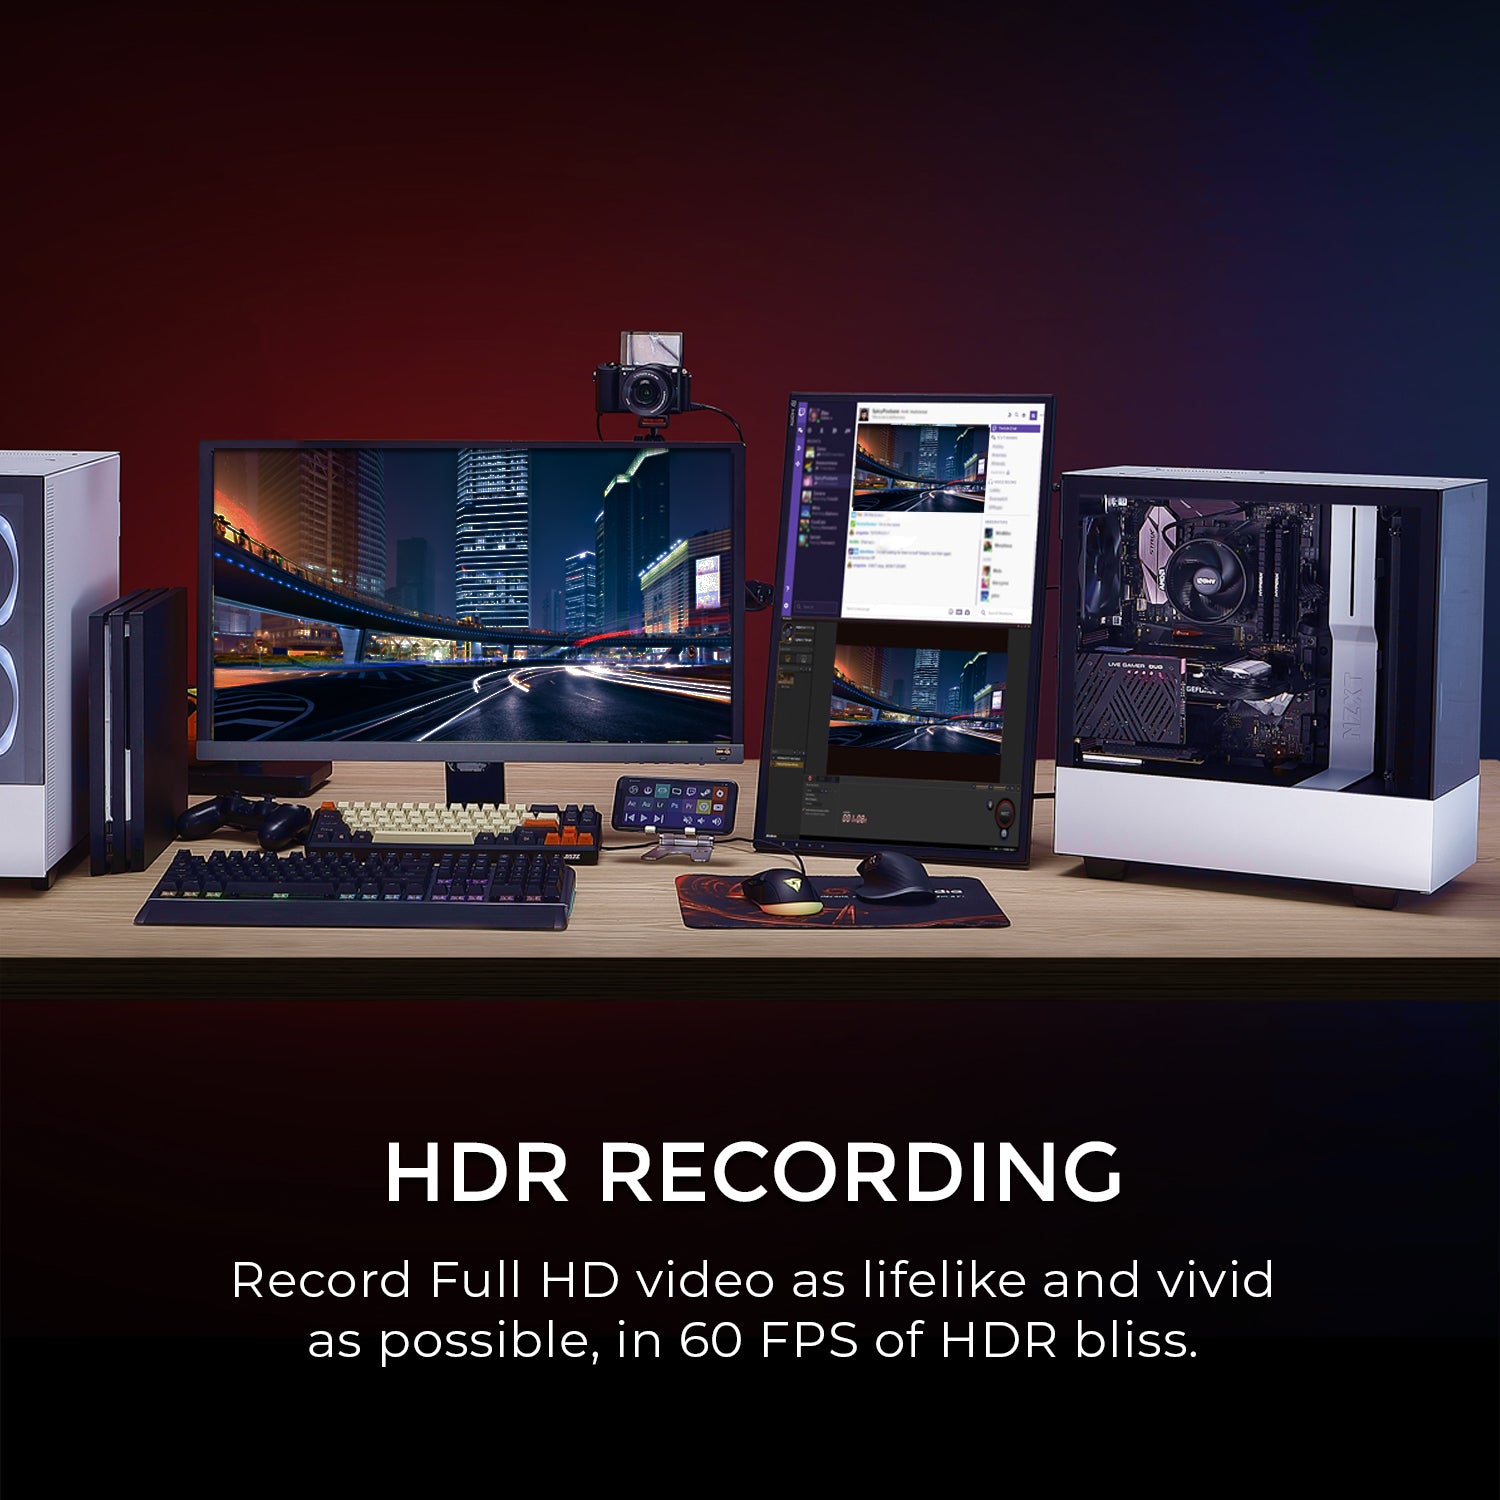 GC570D 4k60 HDR Internal Capture Card for Streaming | AVerMedia